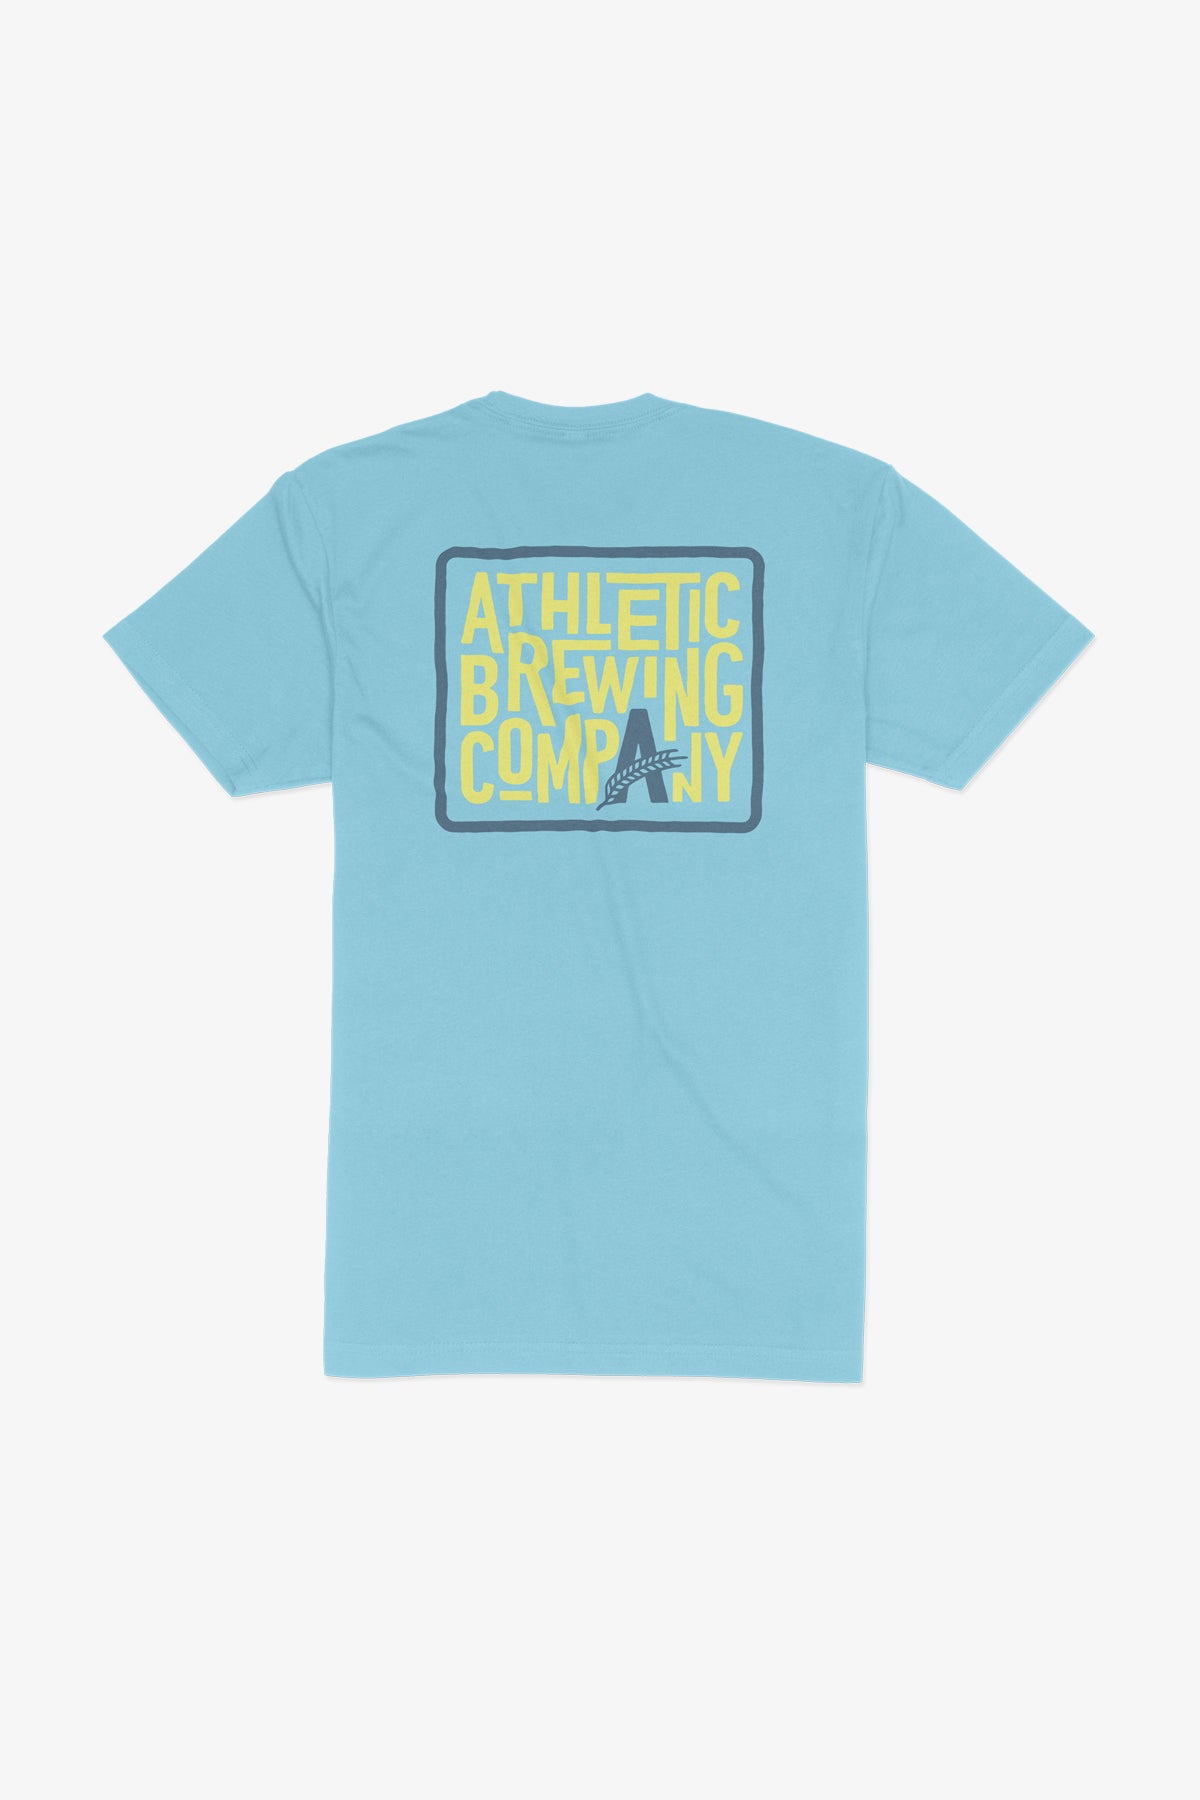 Athletics T-Shirt Design Graphic by BTeedesign · Creative Fabrica